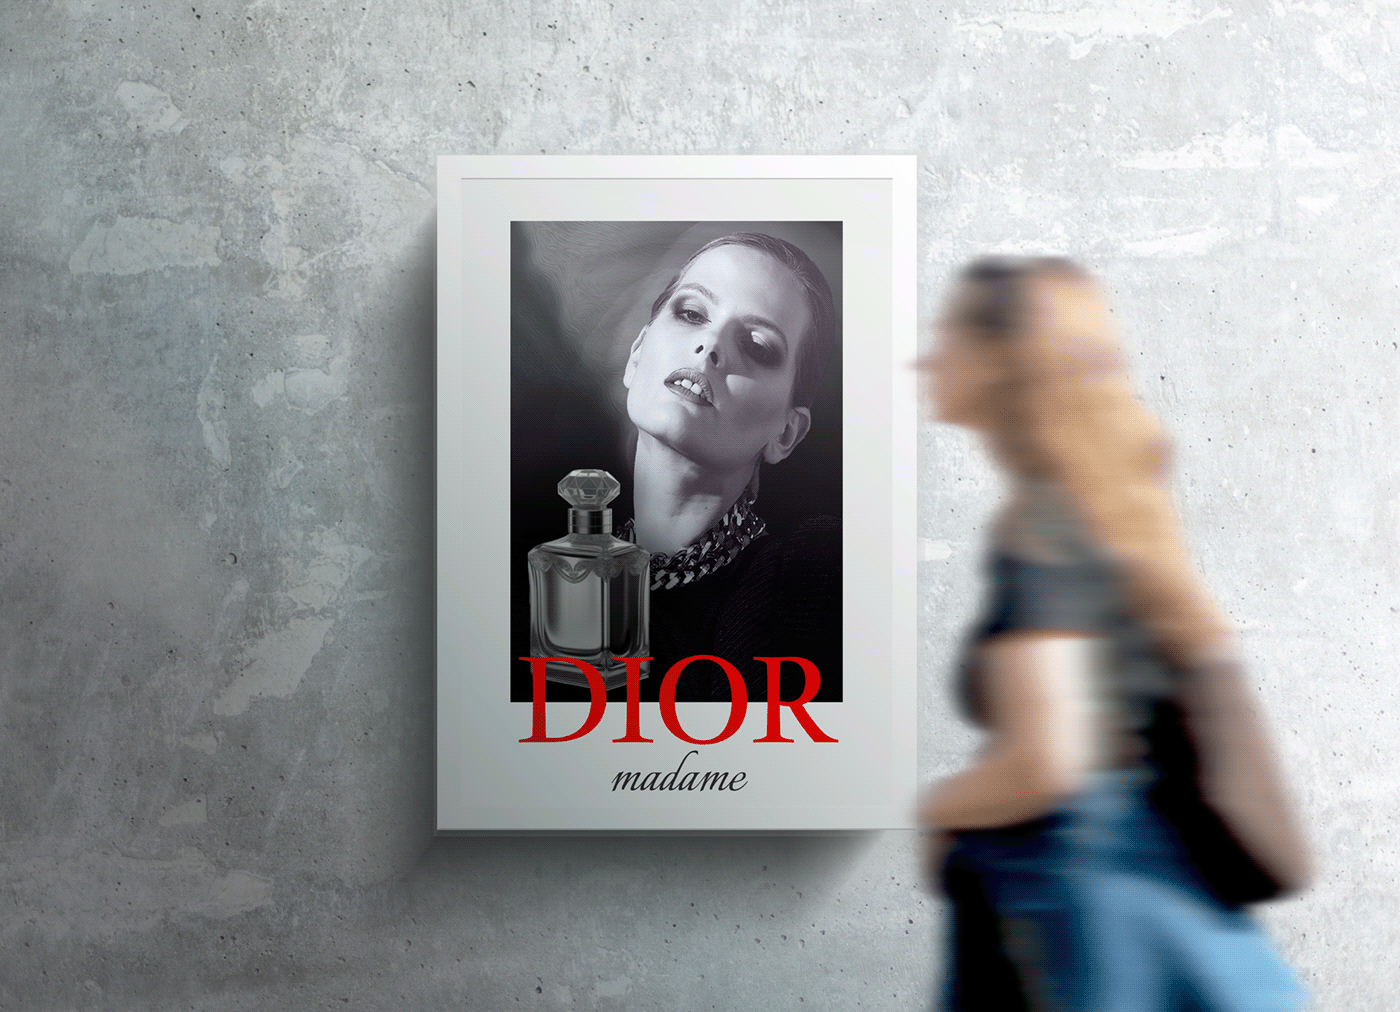 poster Student work student project учебный проект Dior